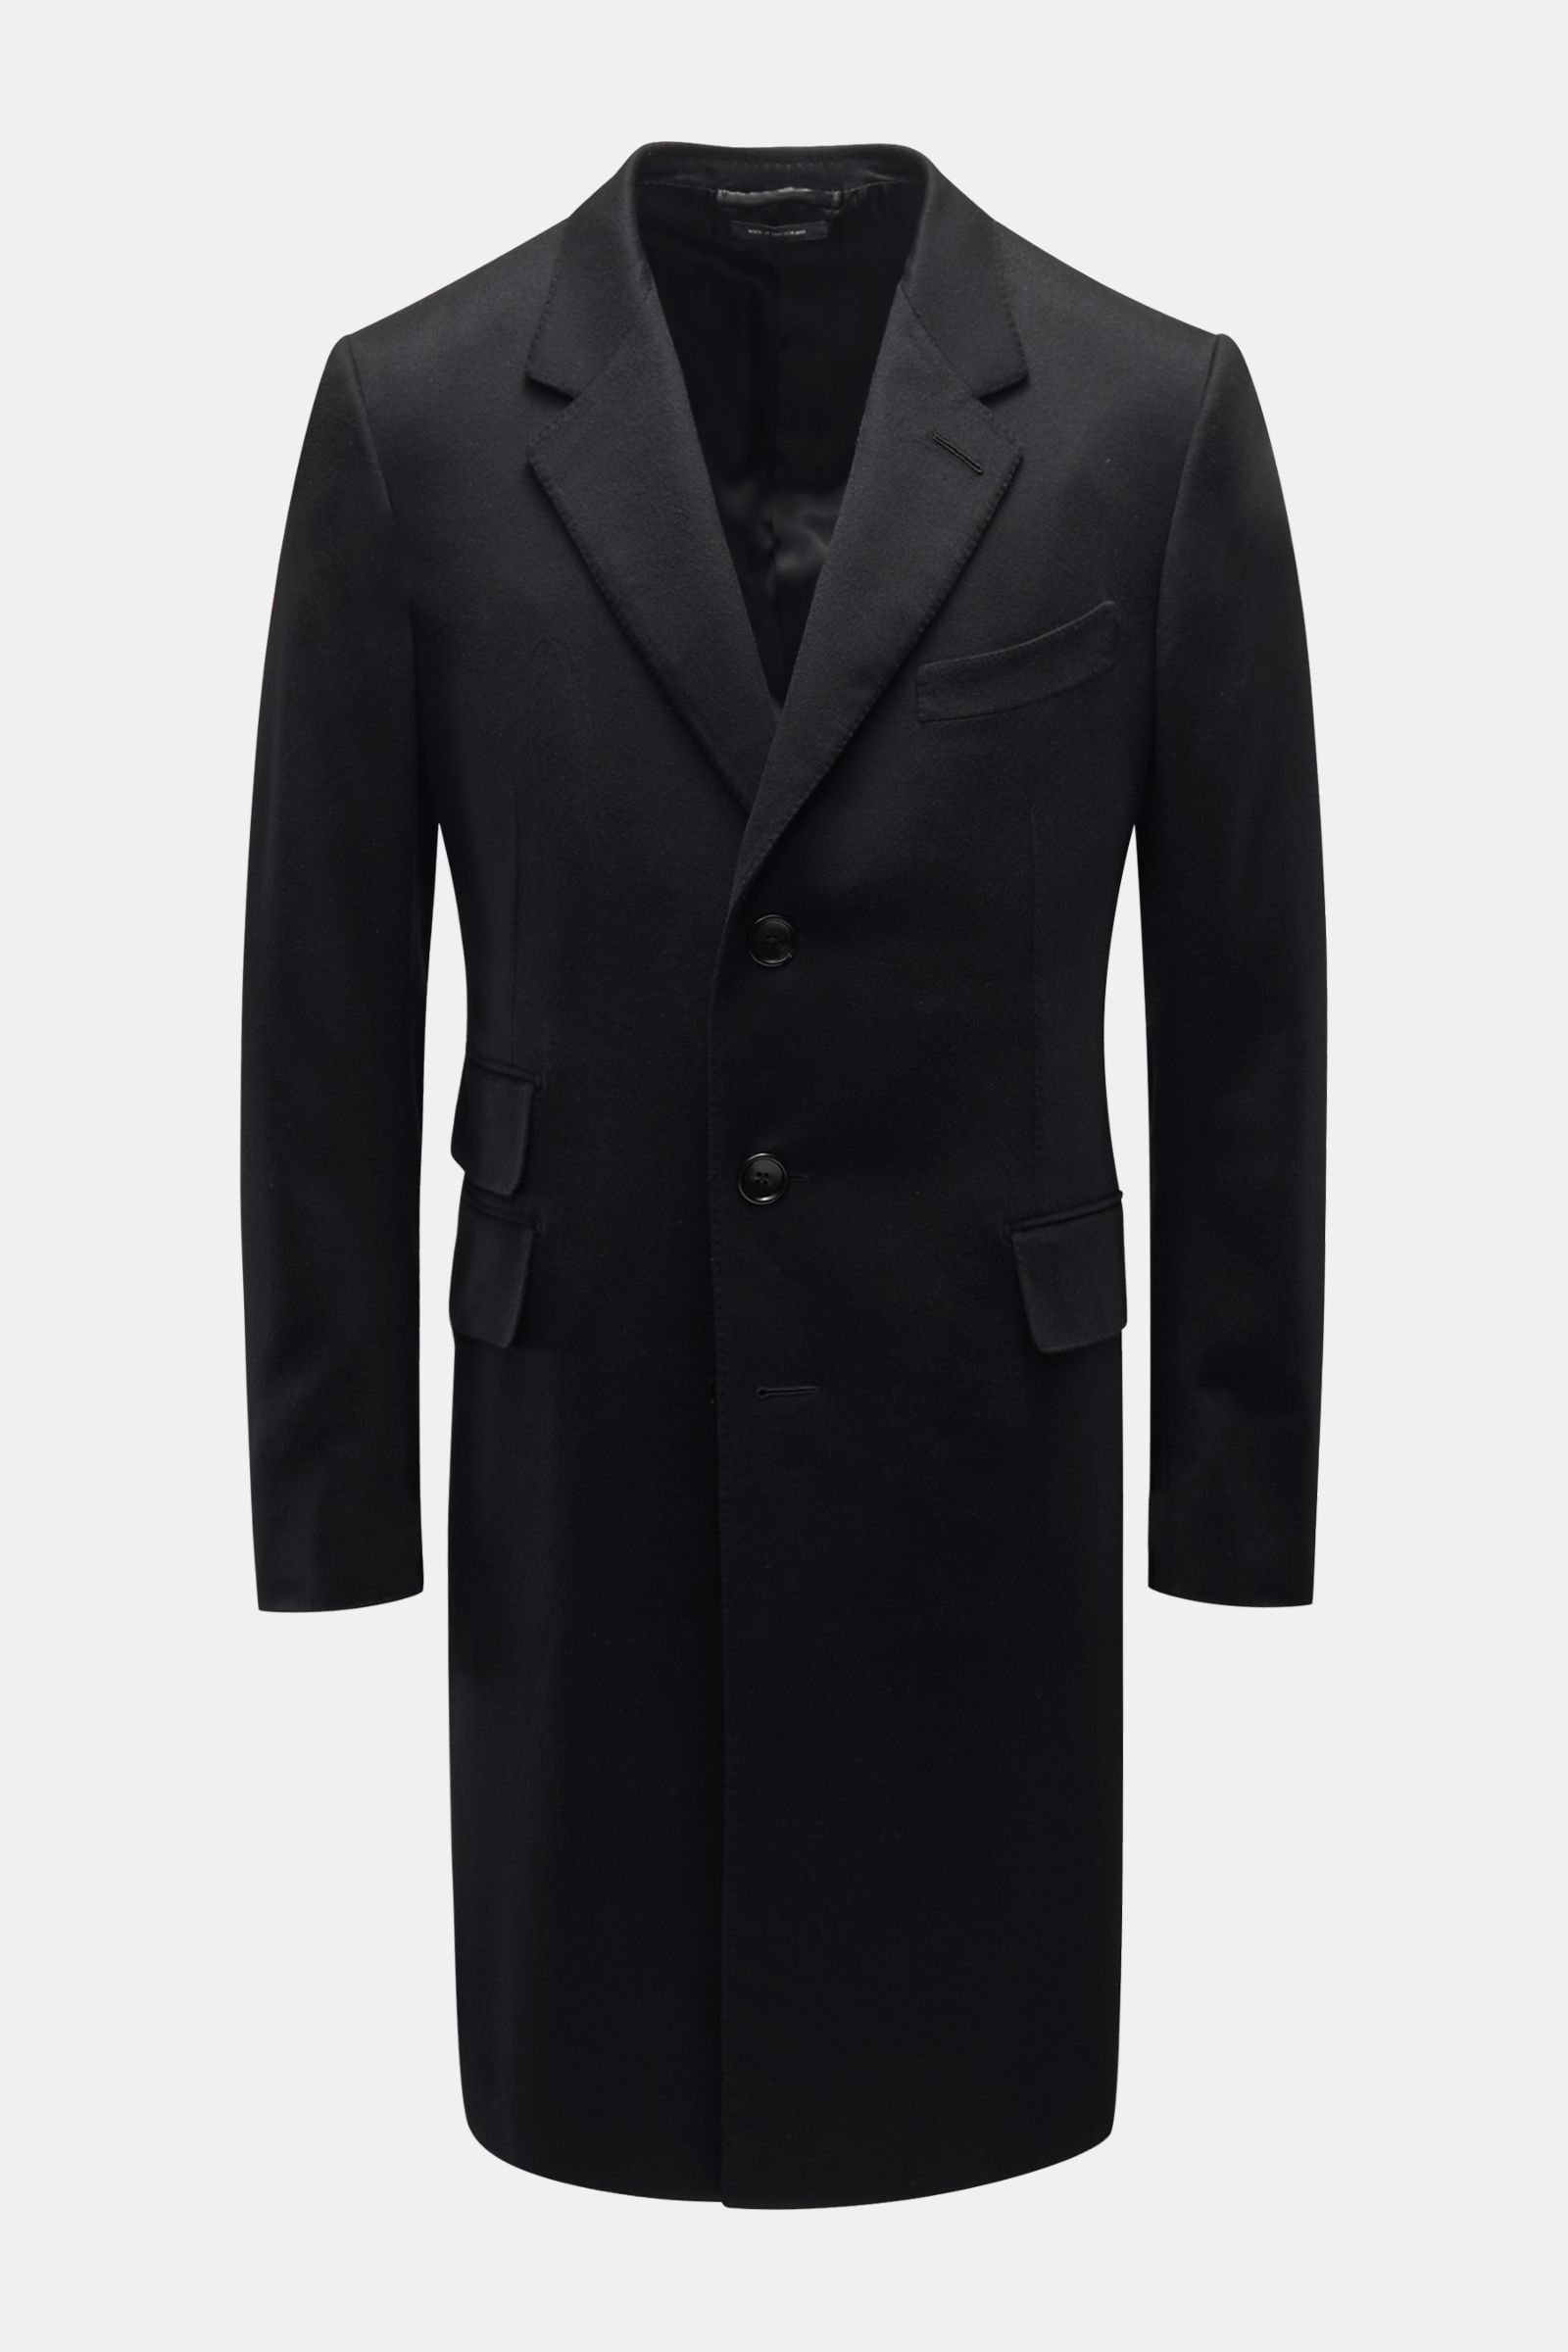 TOM FORD cashmere coat black | BRAUN Hamburg